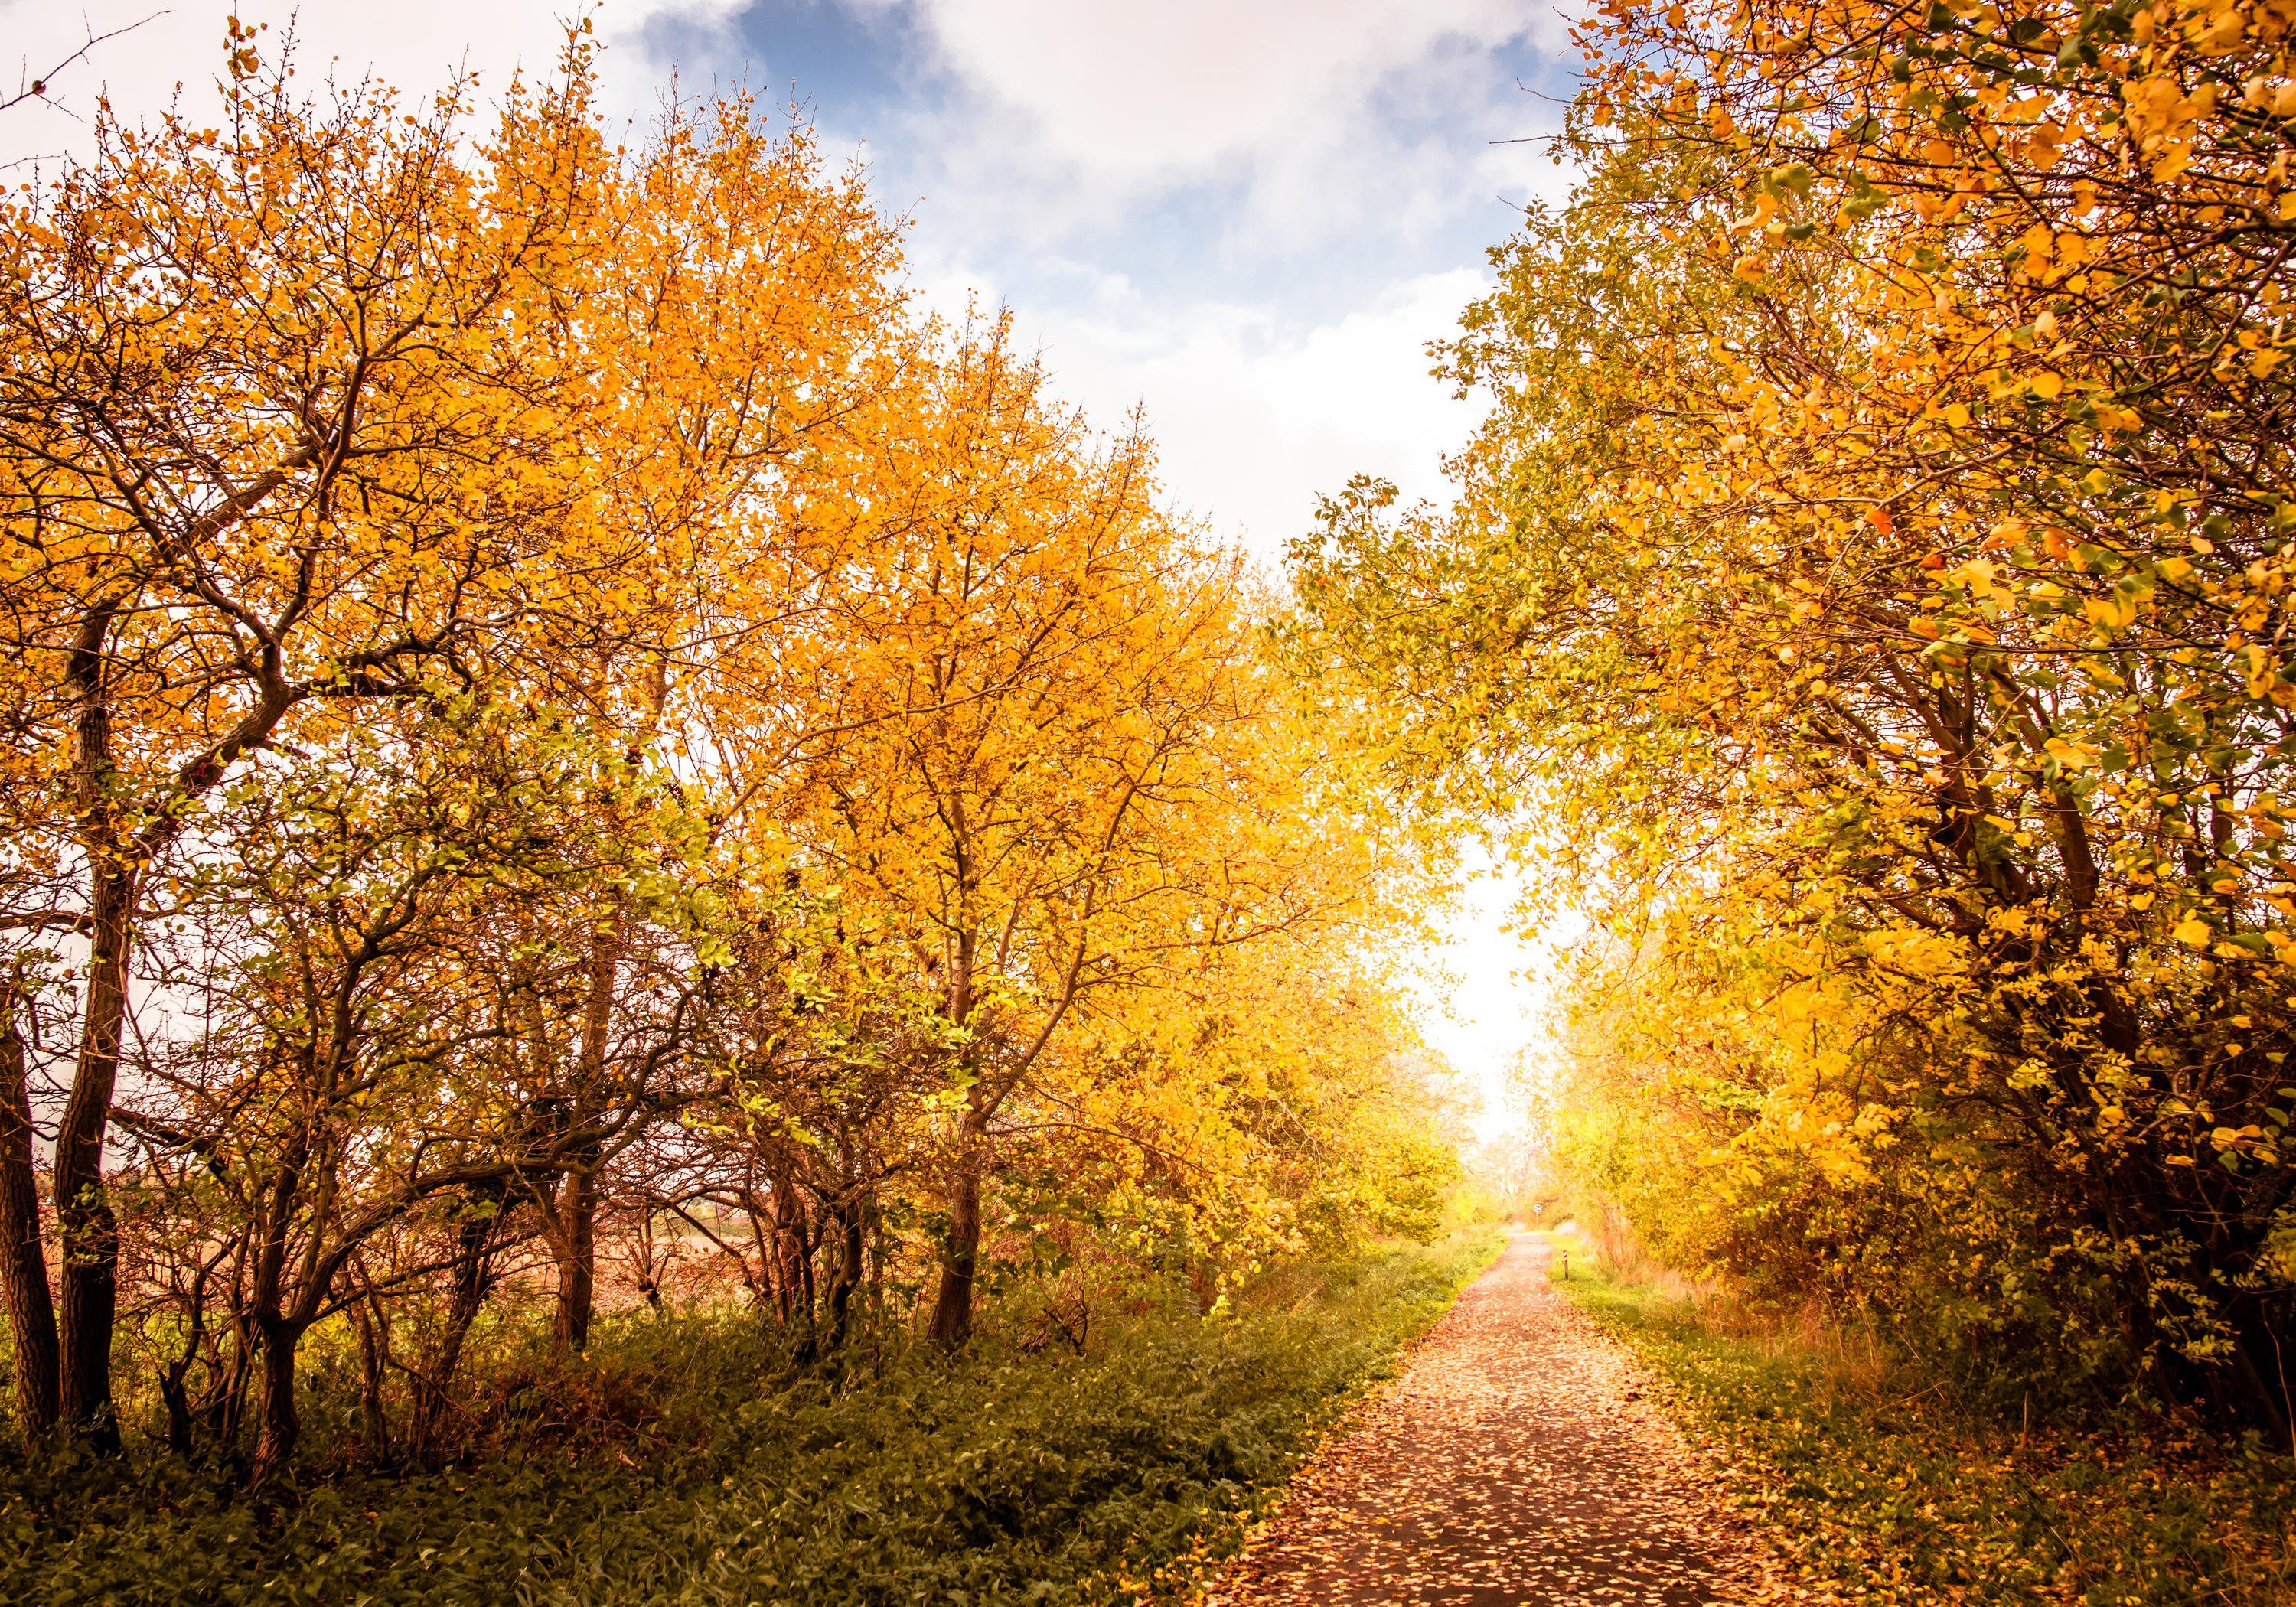 wandmotiv24 Fototapete Herbstlandschaft in warmen Farben, glatt, Wandtapete, Motivtapete, matt, Vliestapete